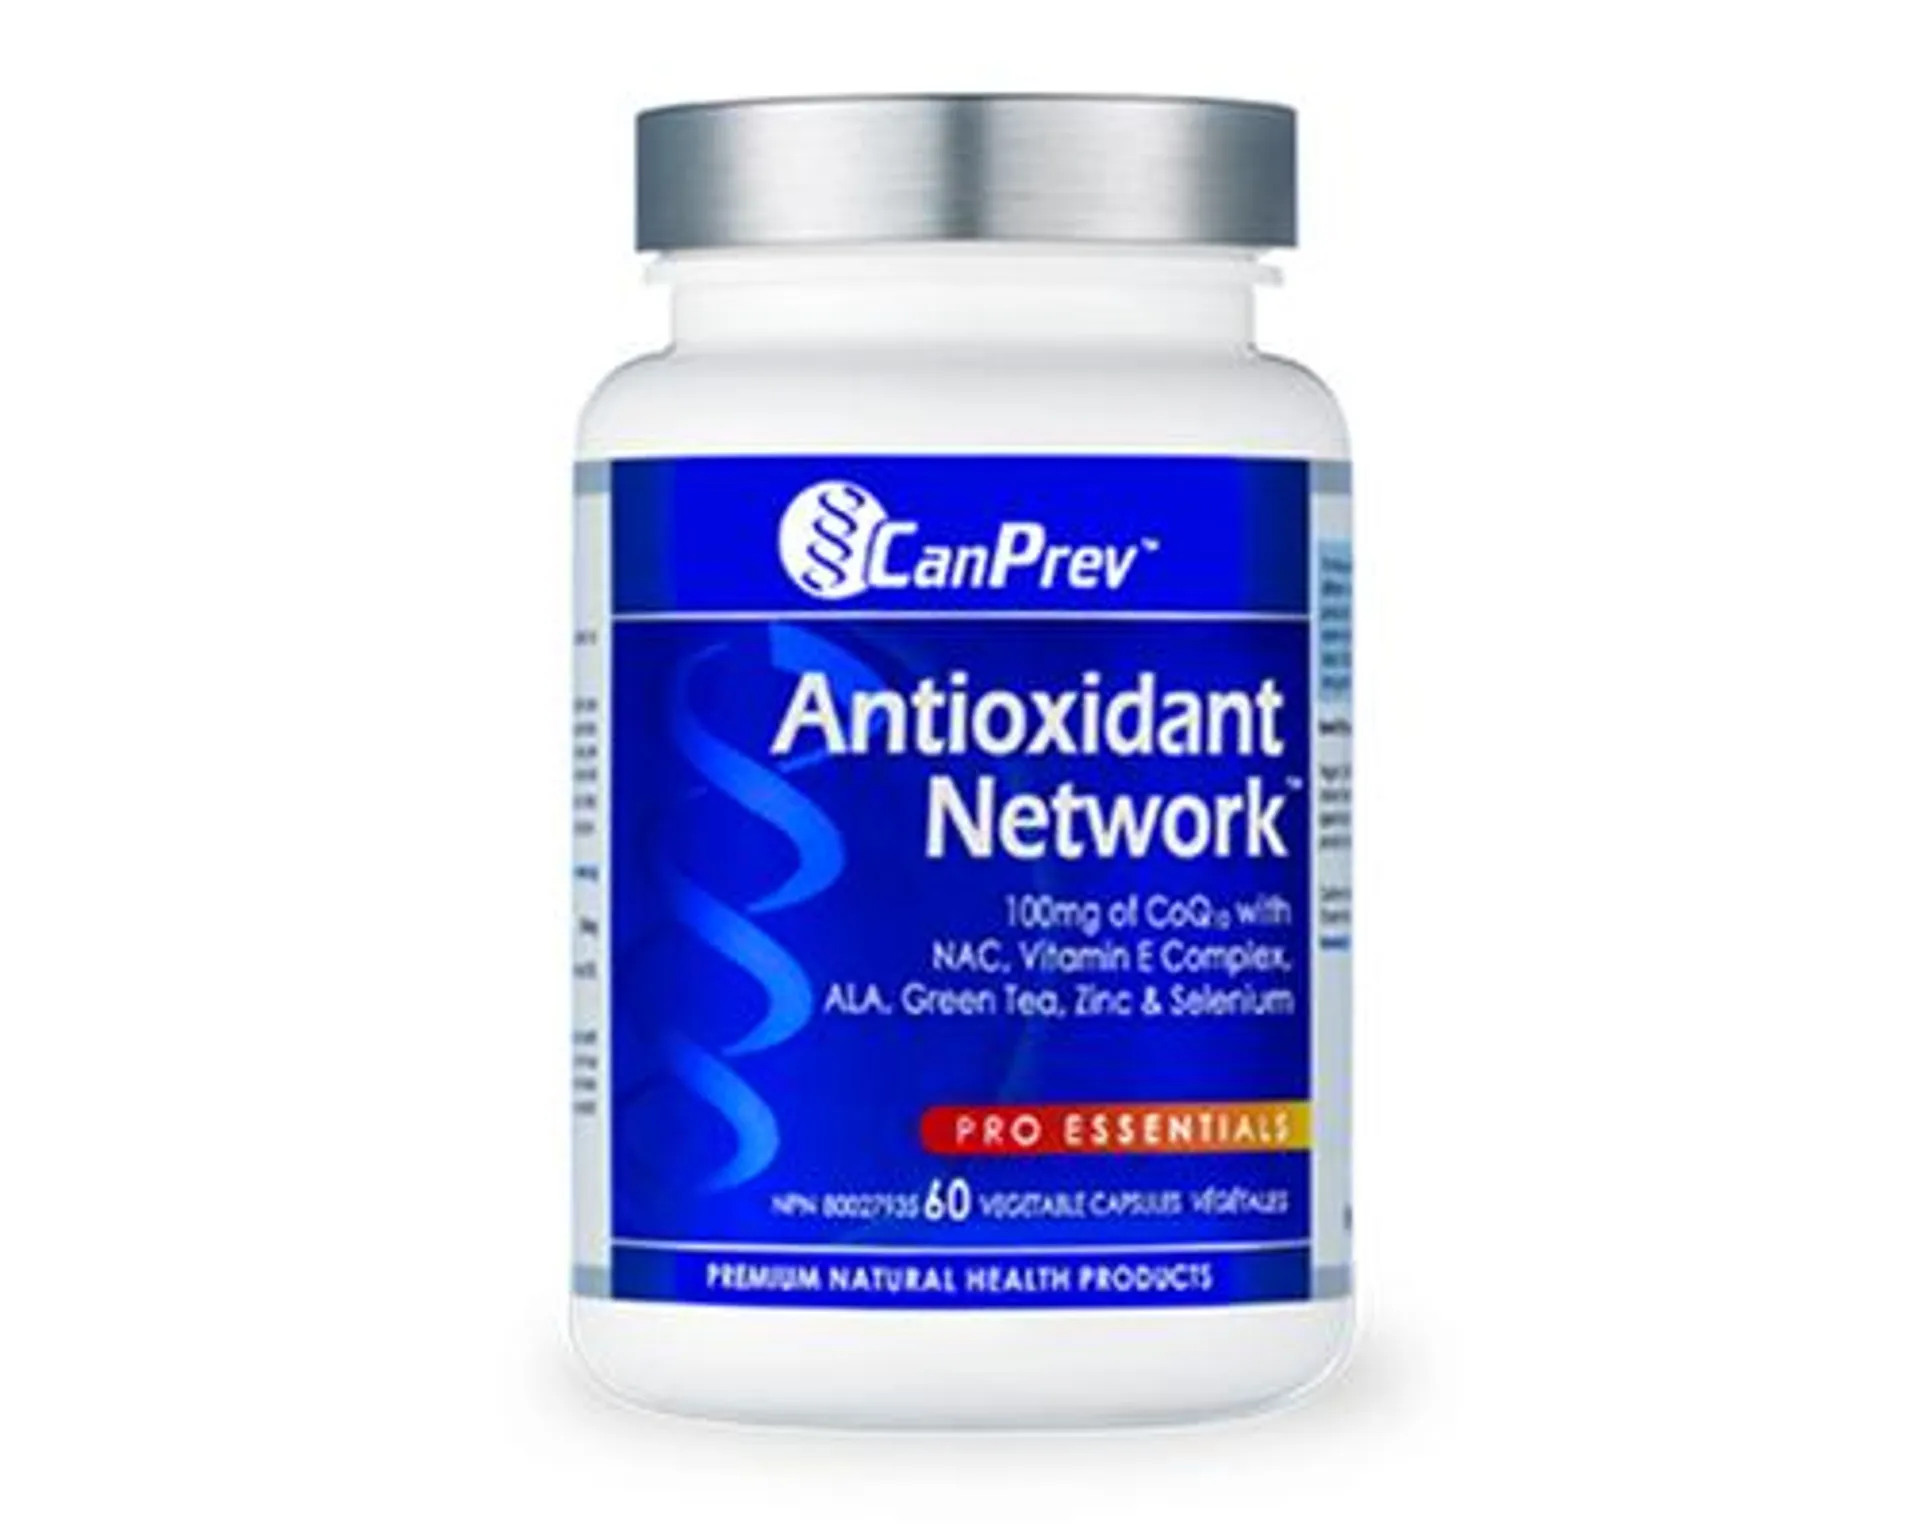 CanPrev Antioxidant Network 60 Veggie Caps